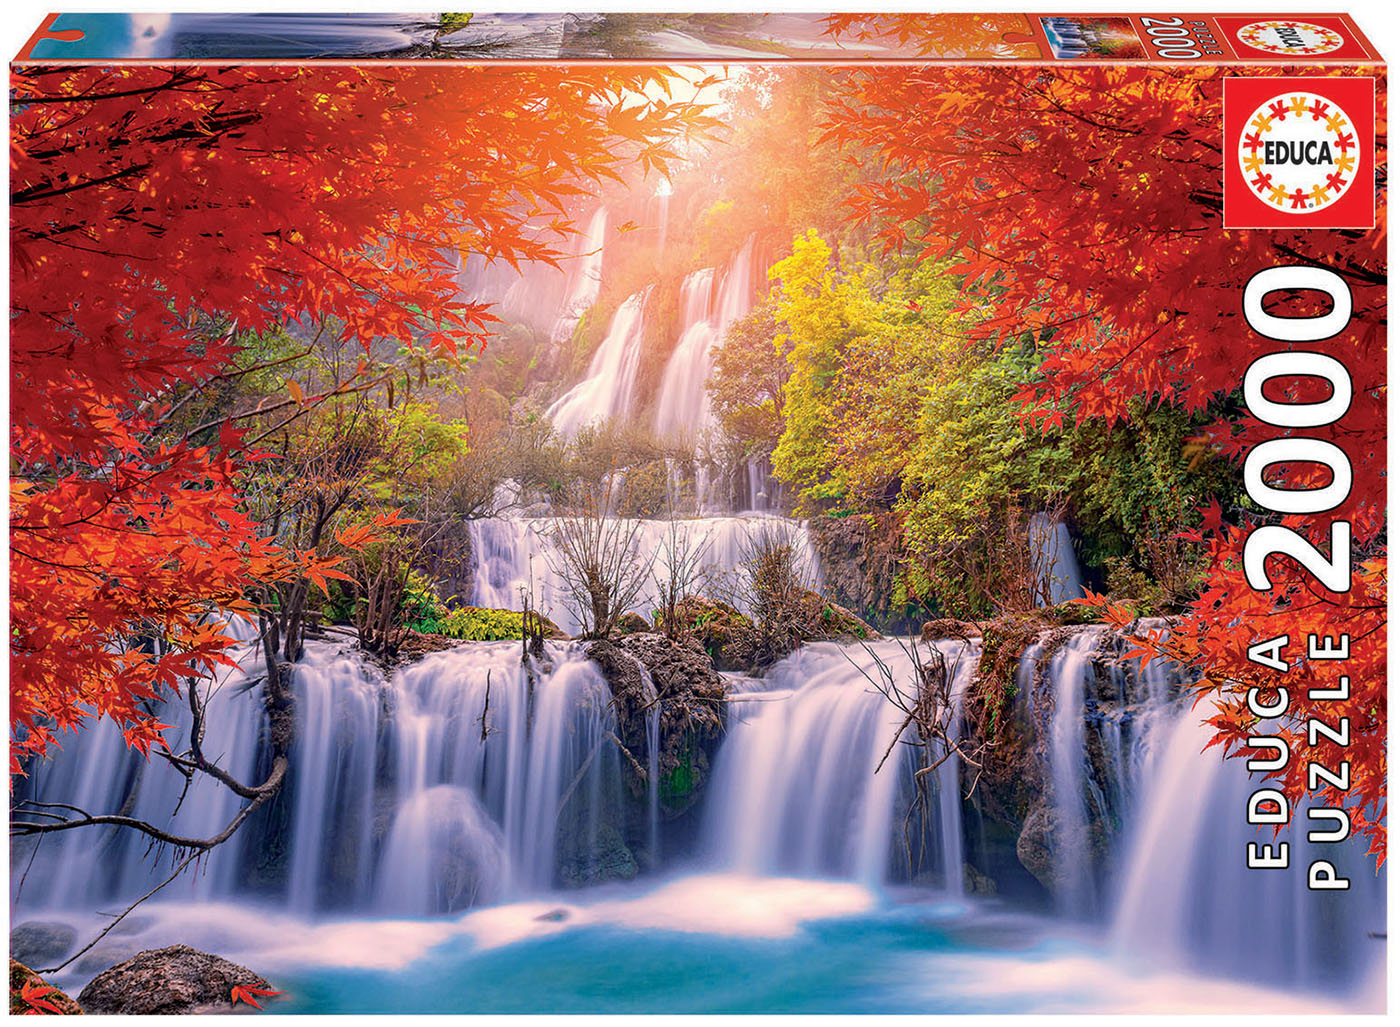 2000 Waterfall in Thailand - Educa Borras